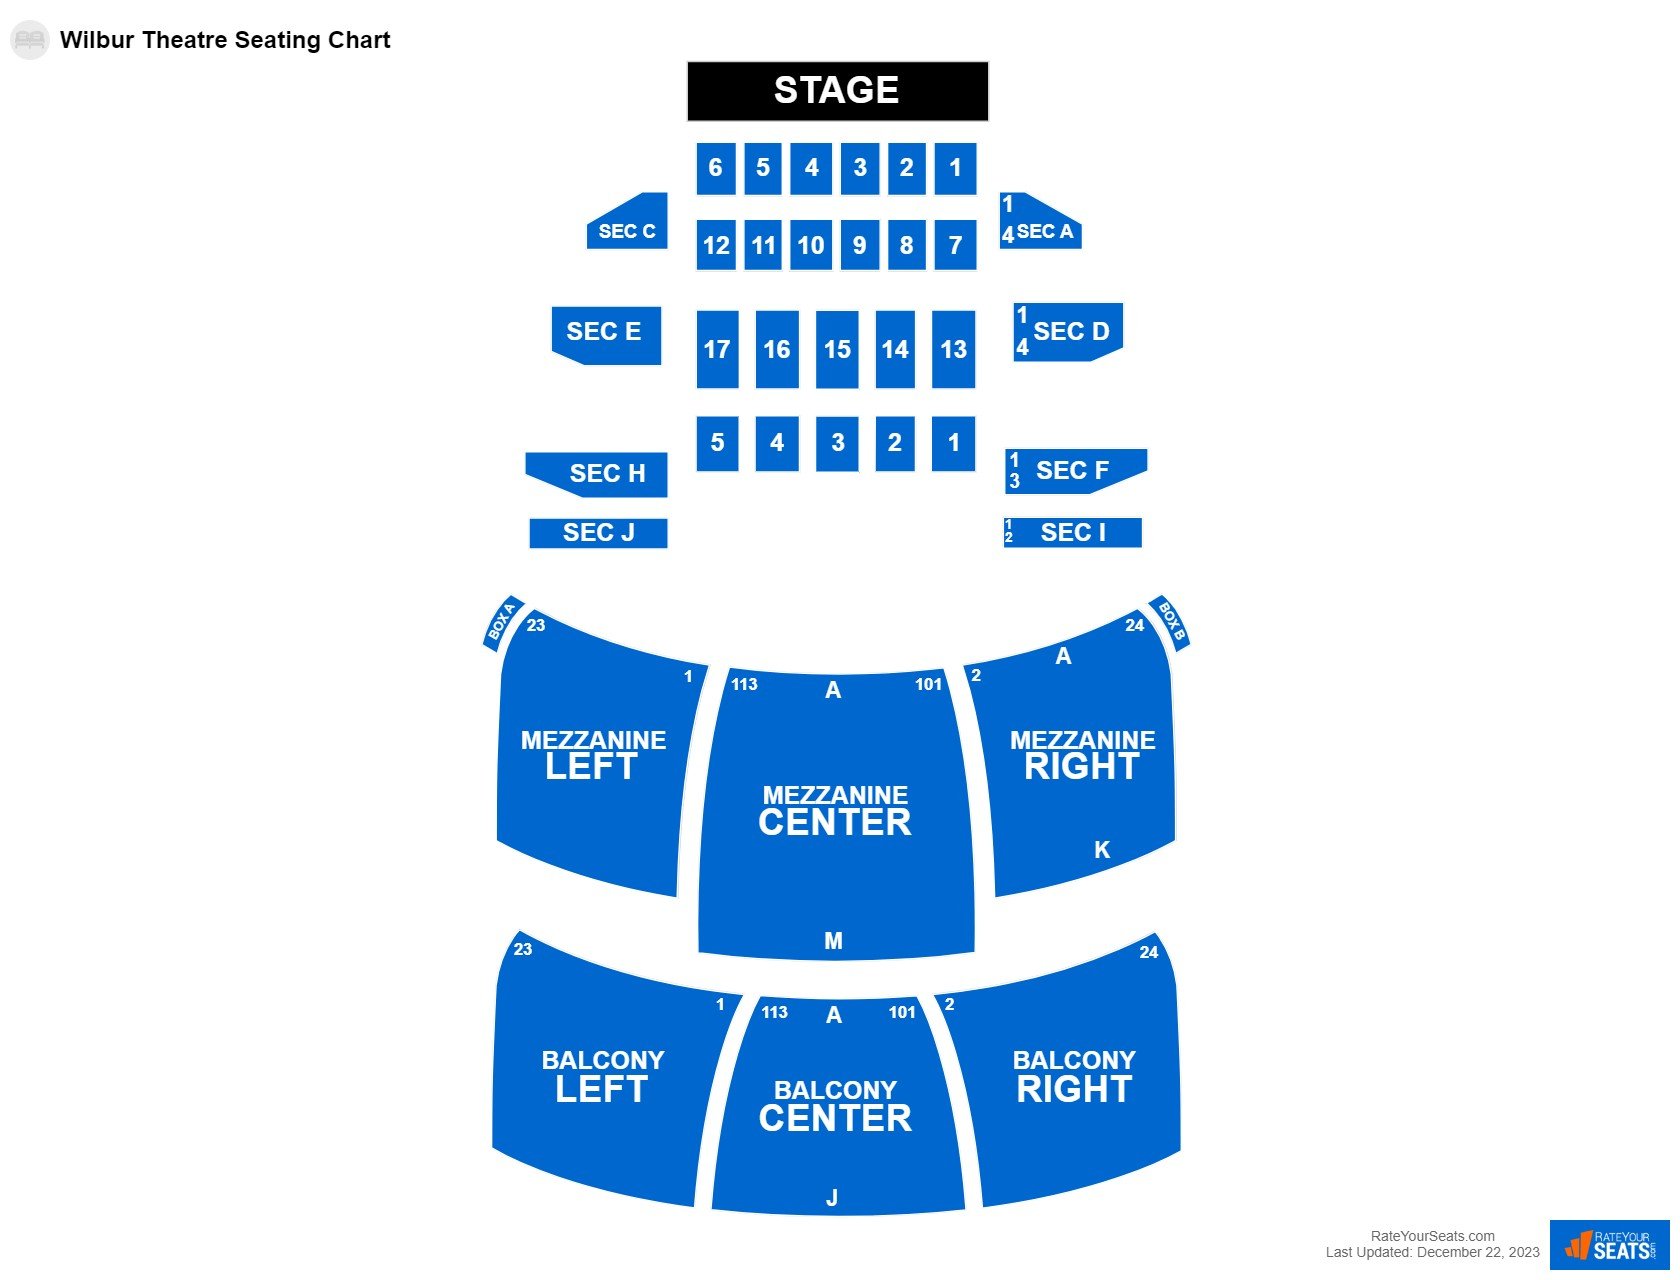 Concert seating chart at Wilbur Theatre